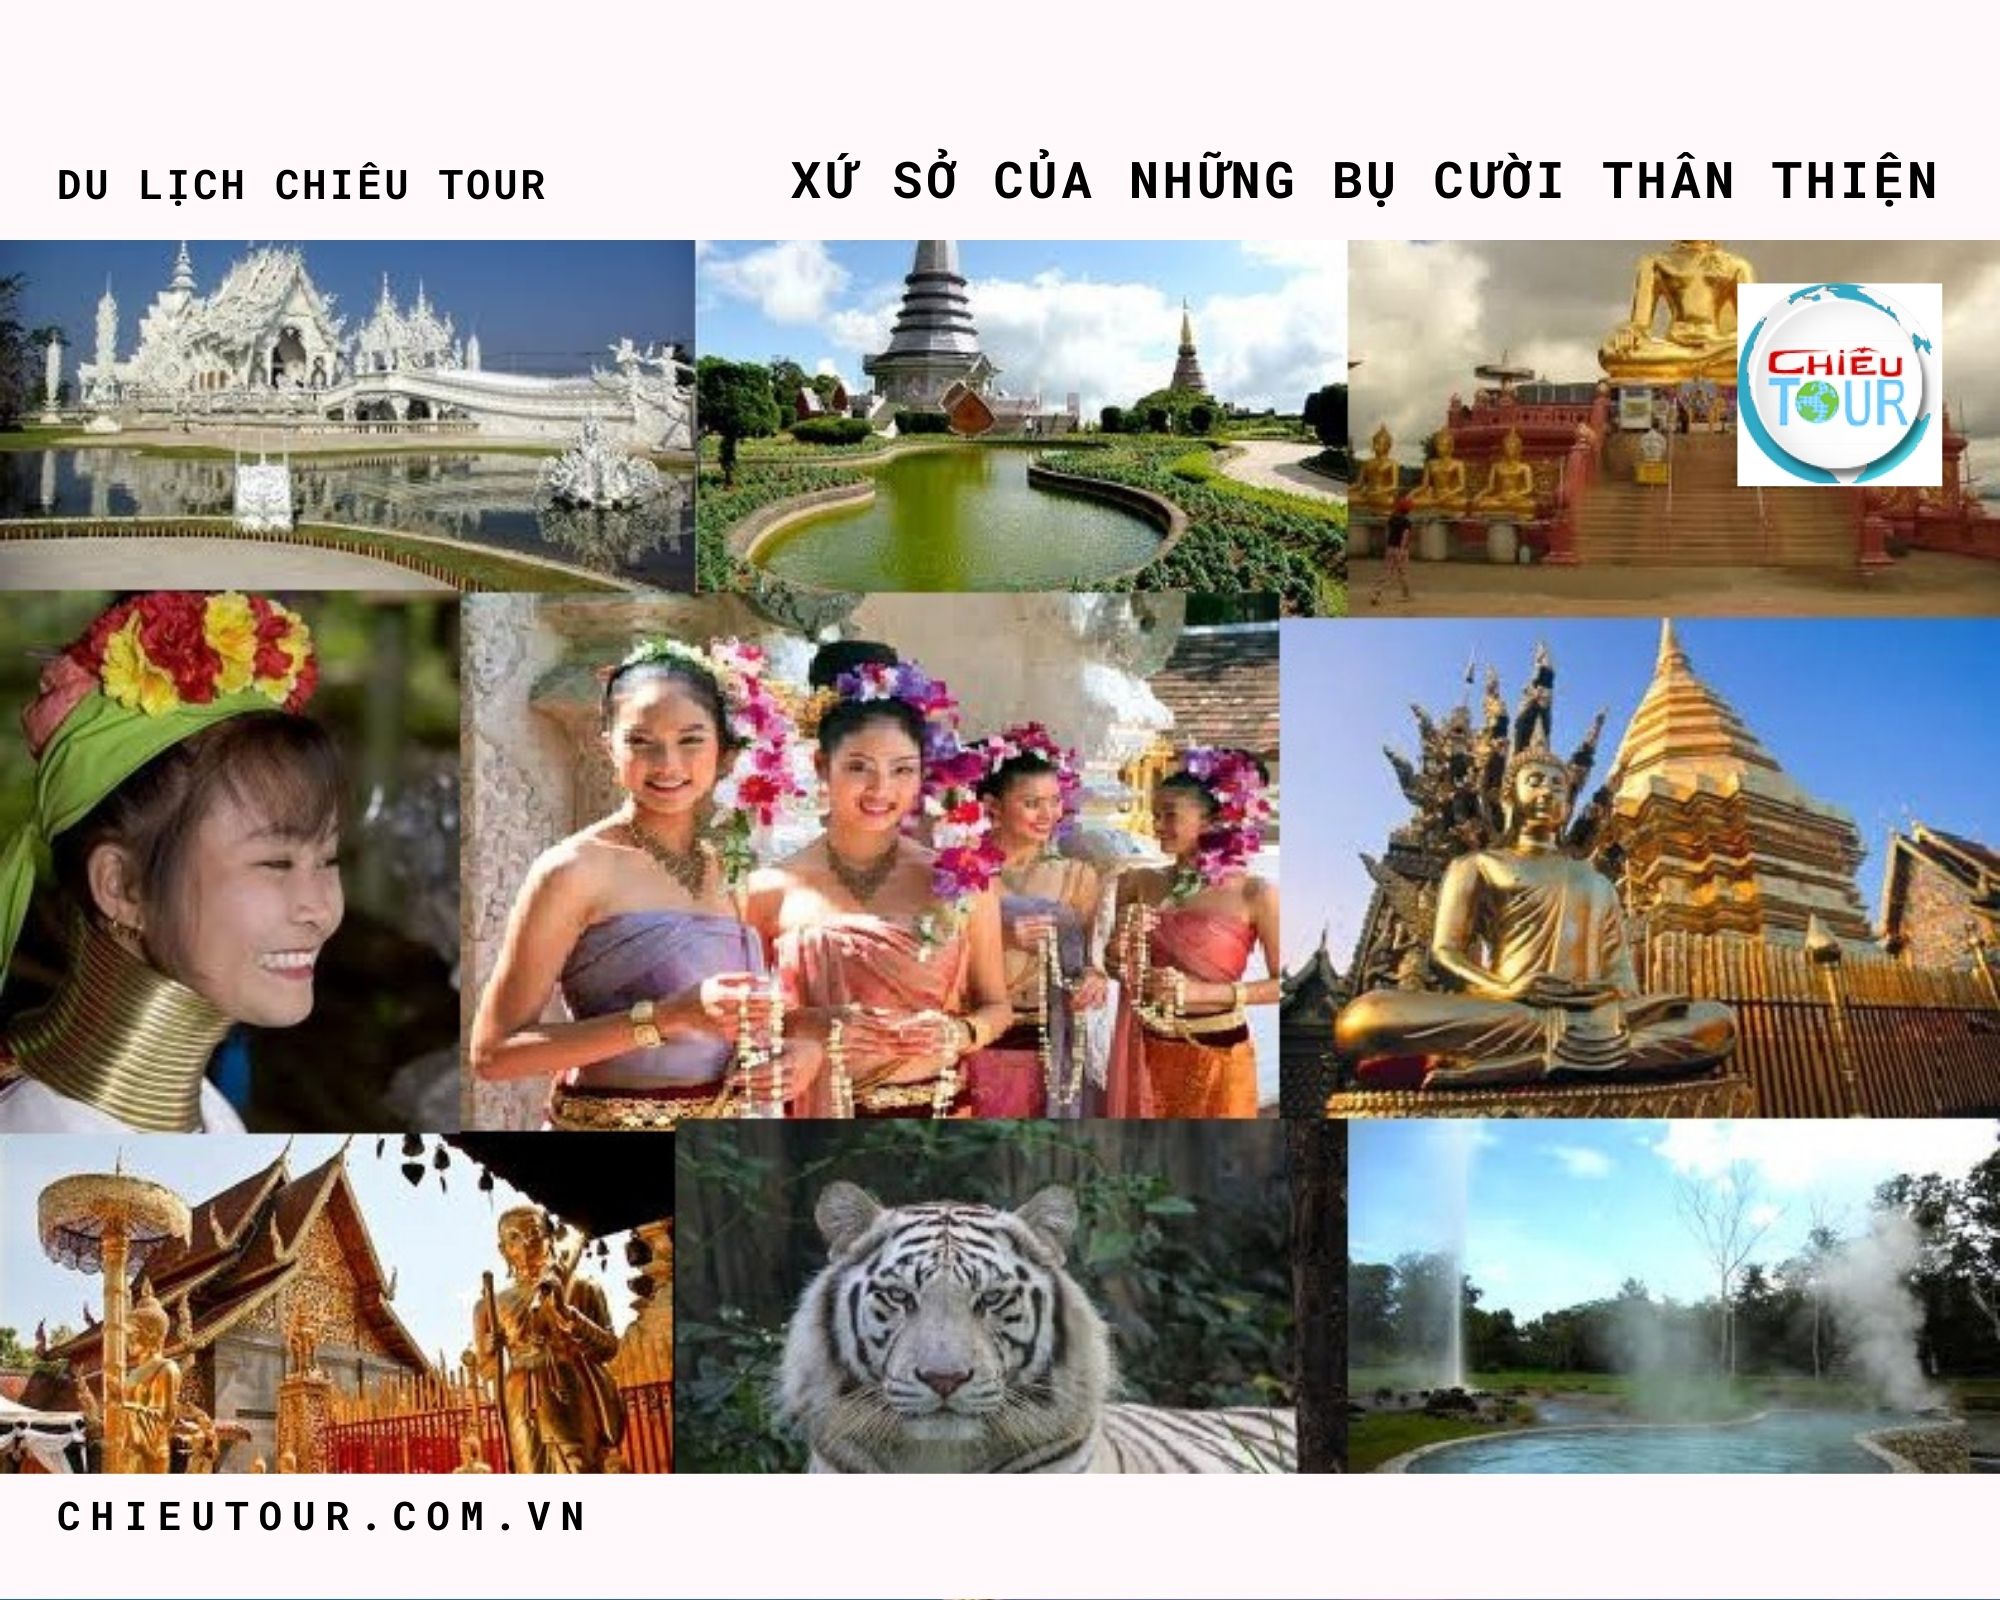 Tour du lịch miền bắc Thái Lan